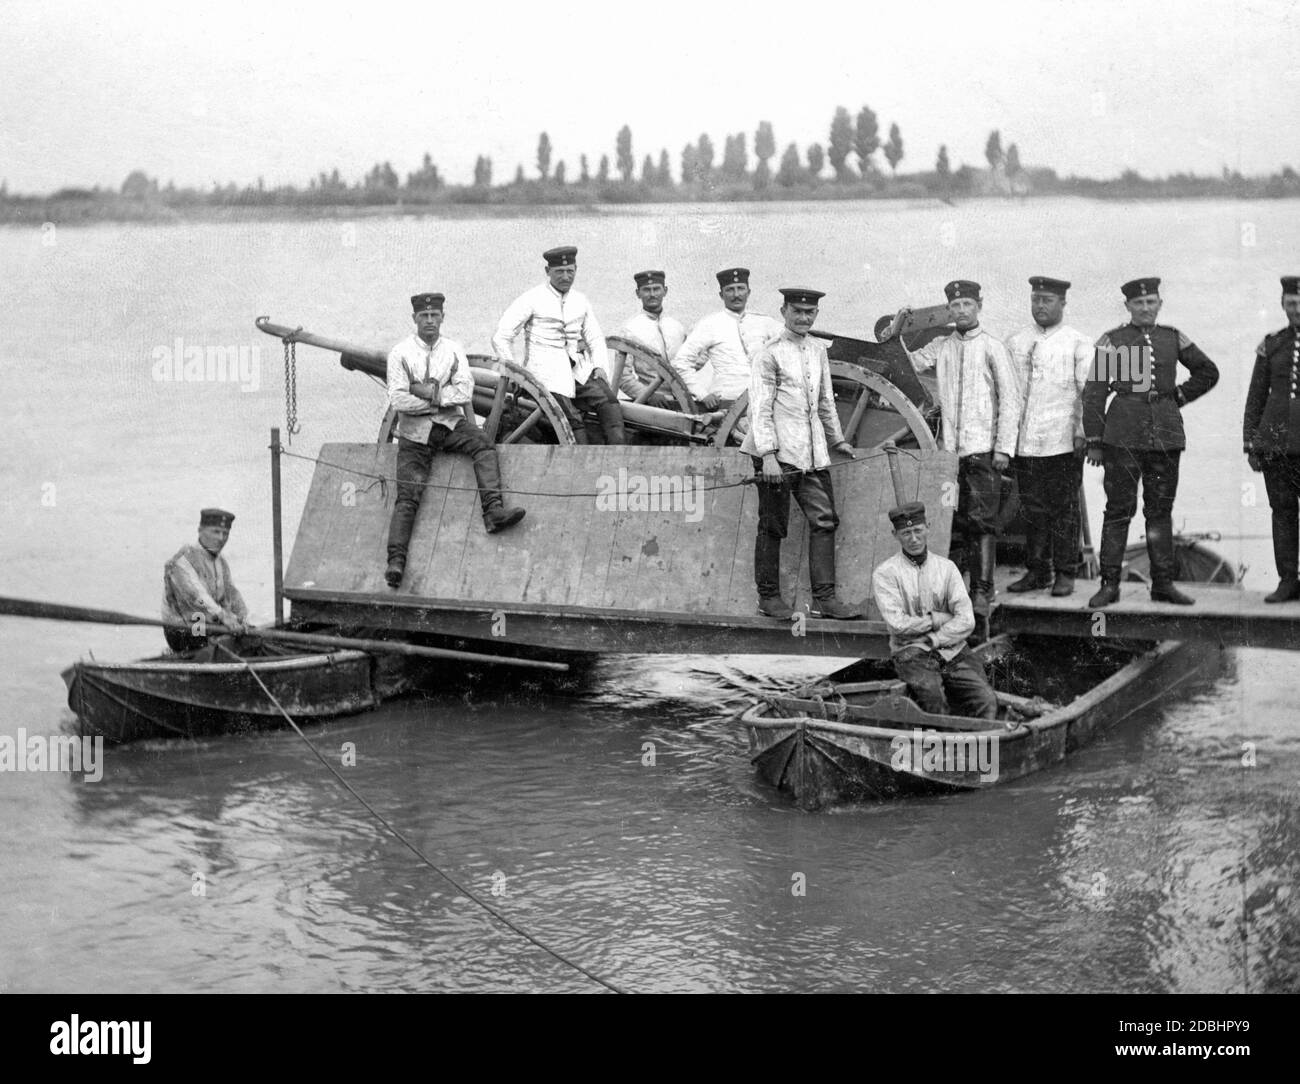 The German Field Artillery Regiment No. 14 on the Rhine near Maxau transporting guns on folding boats. Undated photo. Stock Photo